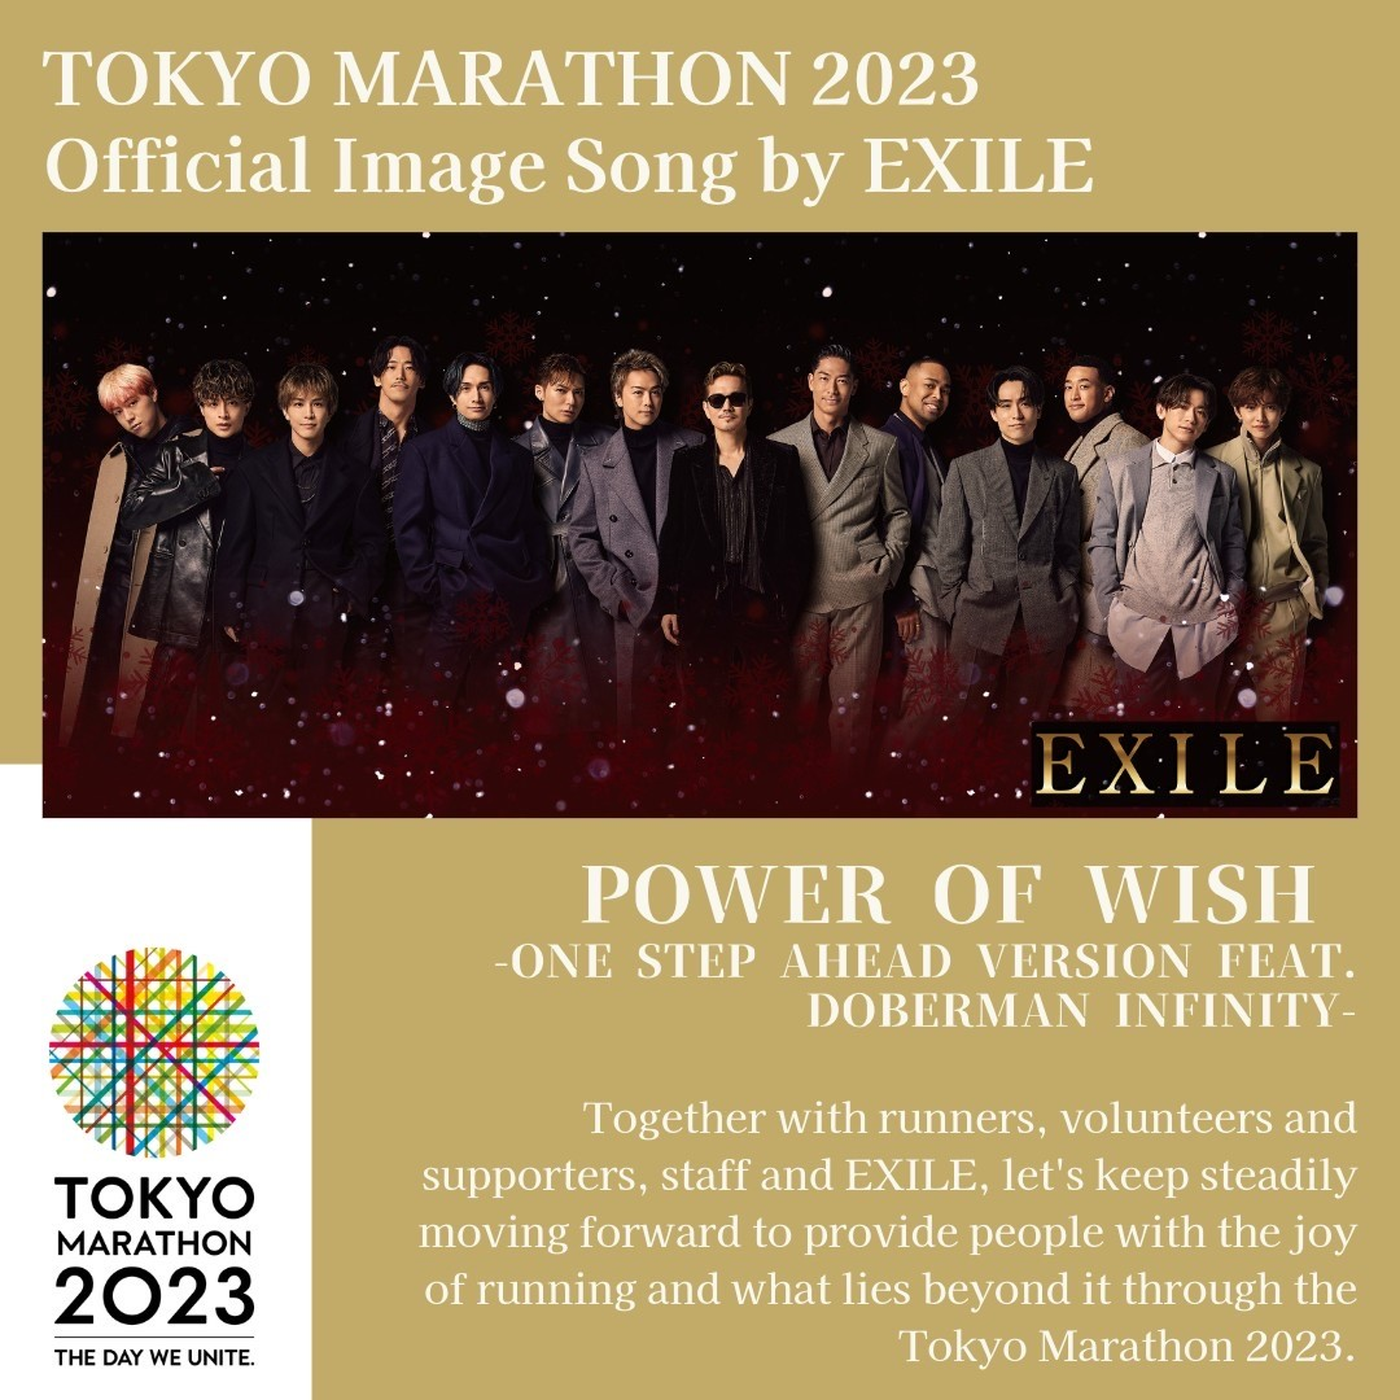 EXILEの新曲「POWER OF WISH」が『東京マラソン2023』公式イメージソングに決定 - 画像一覧（2/2）